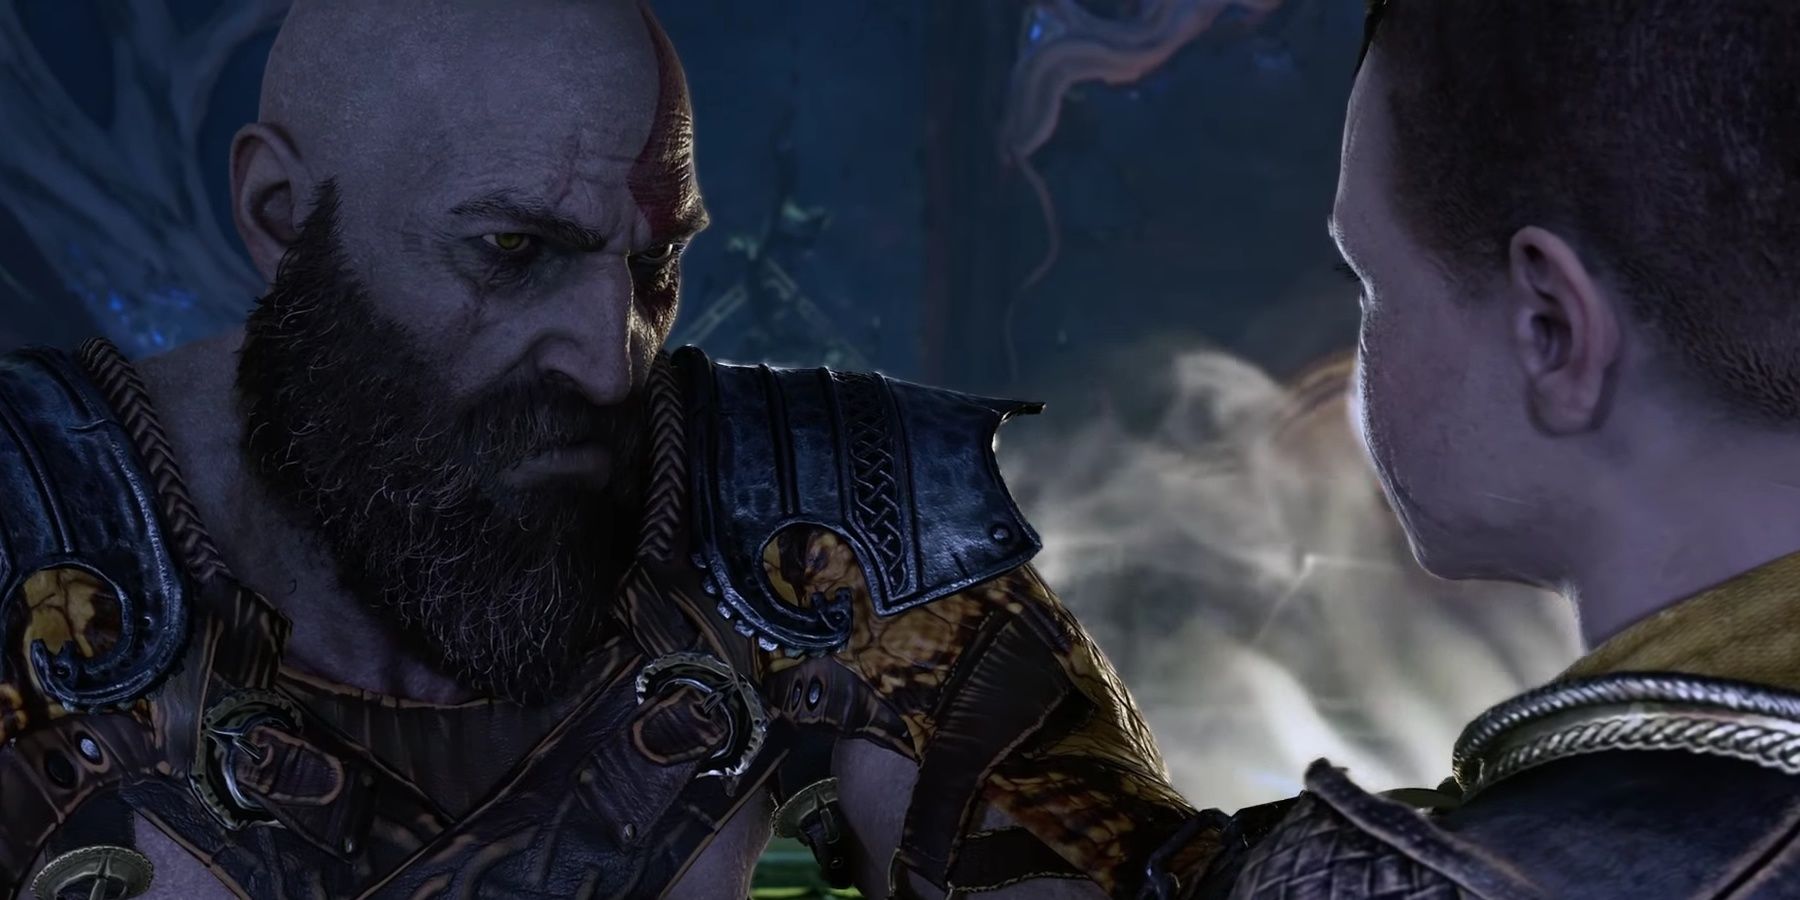 Kratos instructs Atreus on godhood in 2018's God of War